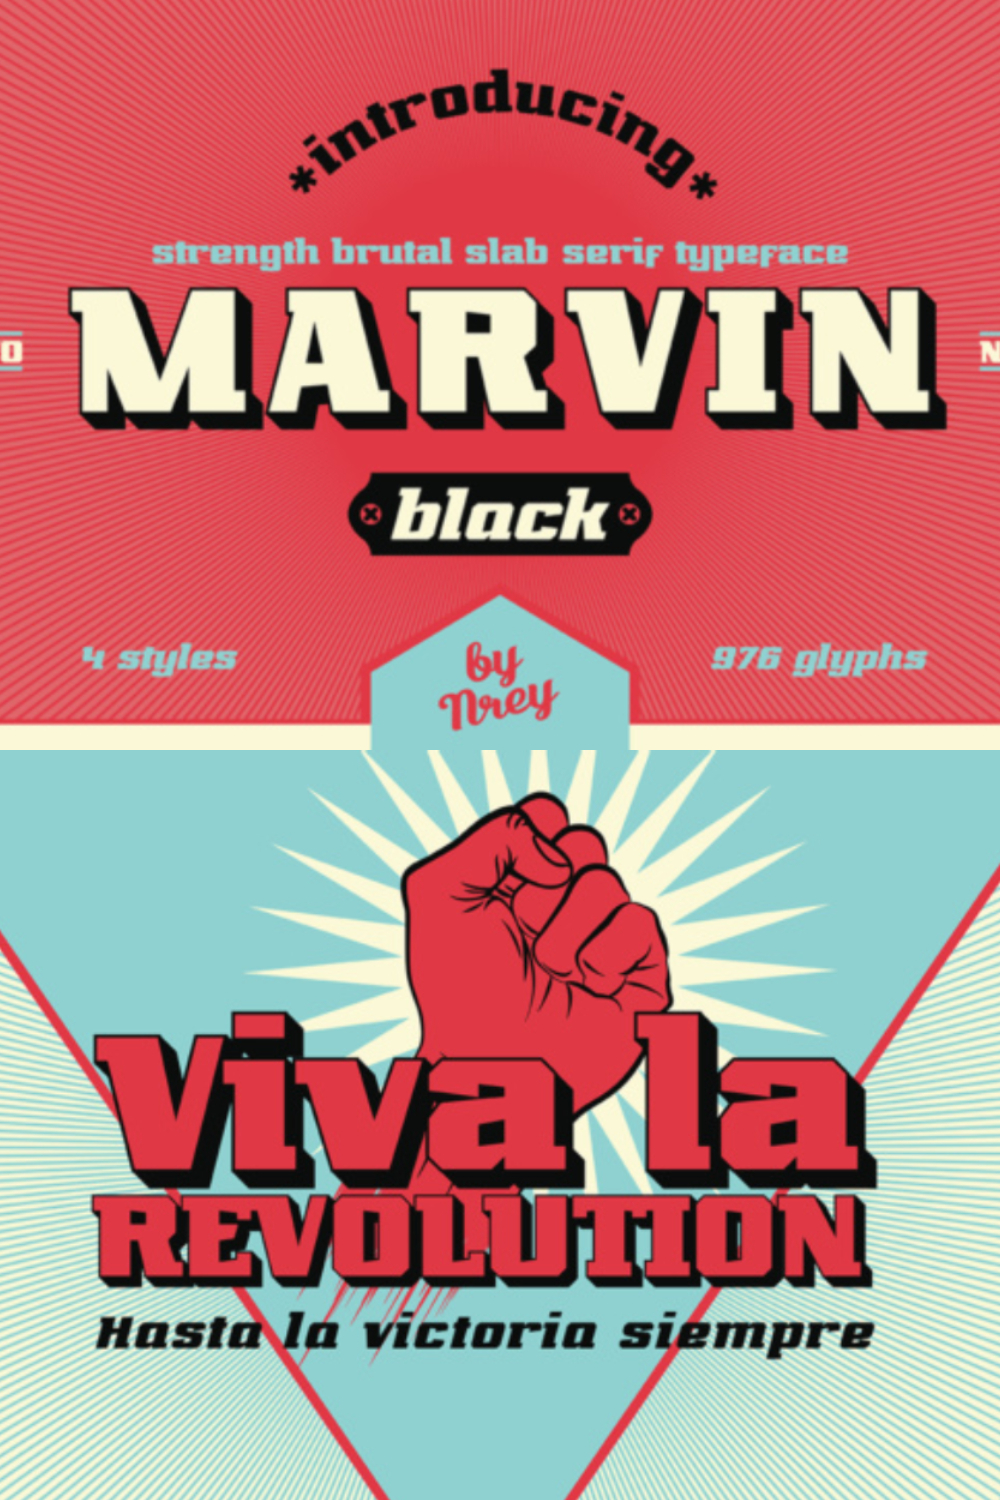 Marvin Black Font - Pinterest.